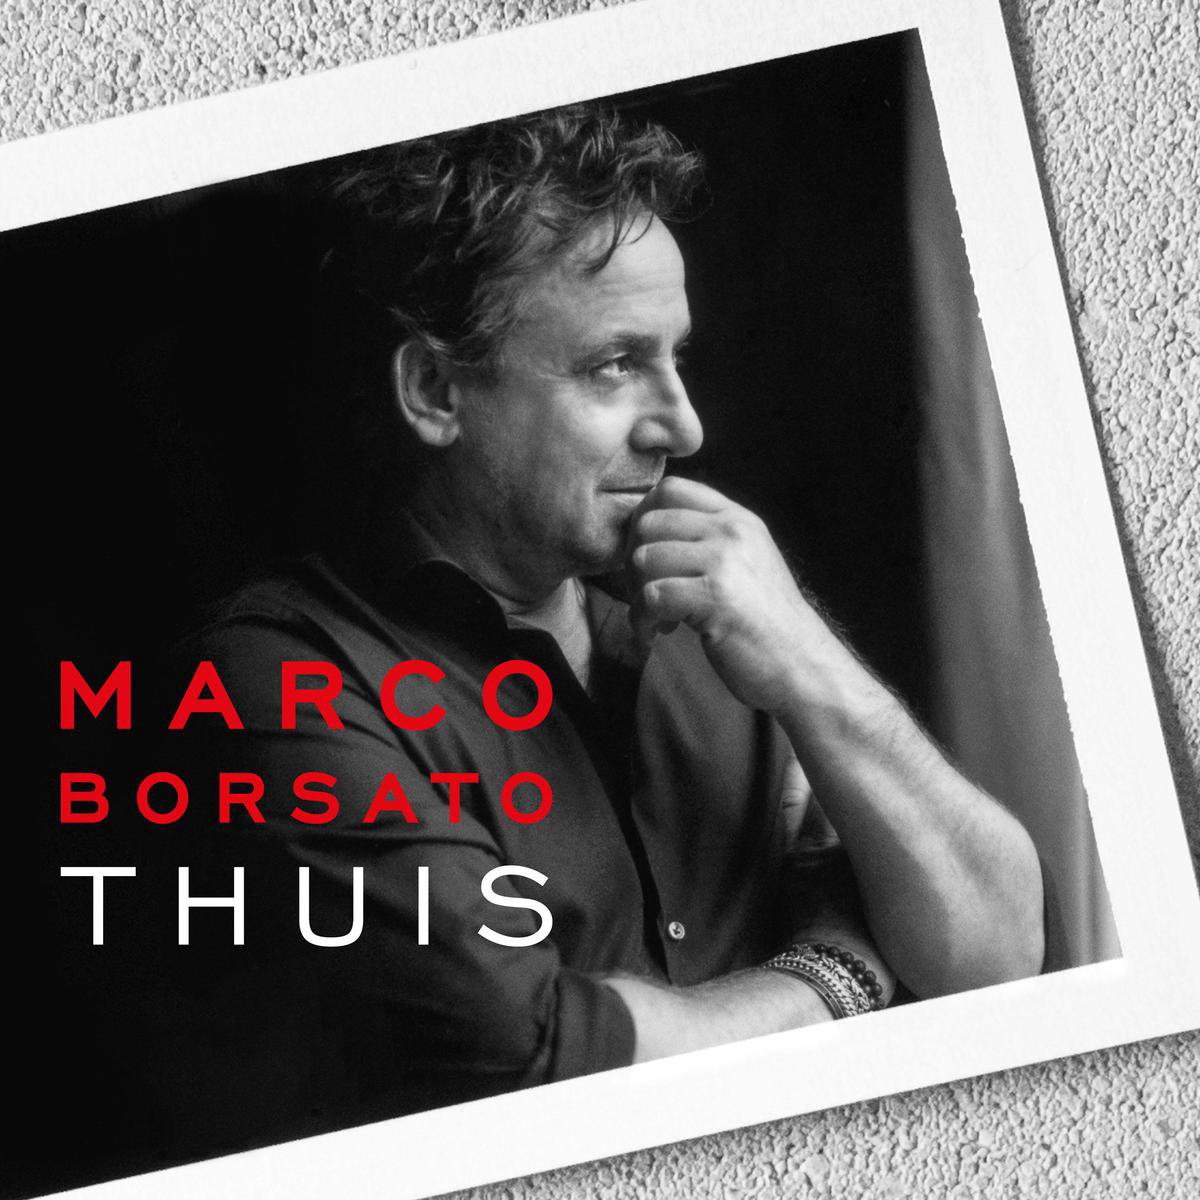 Marco Borsato - Thuis (CD), Marco Borsato | CD (album) | Muziek | bol.com